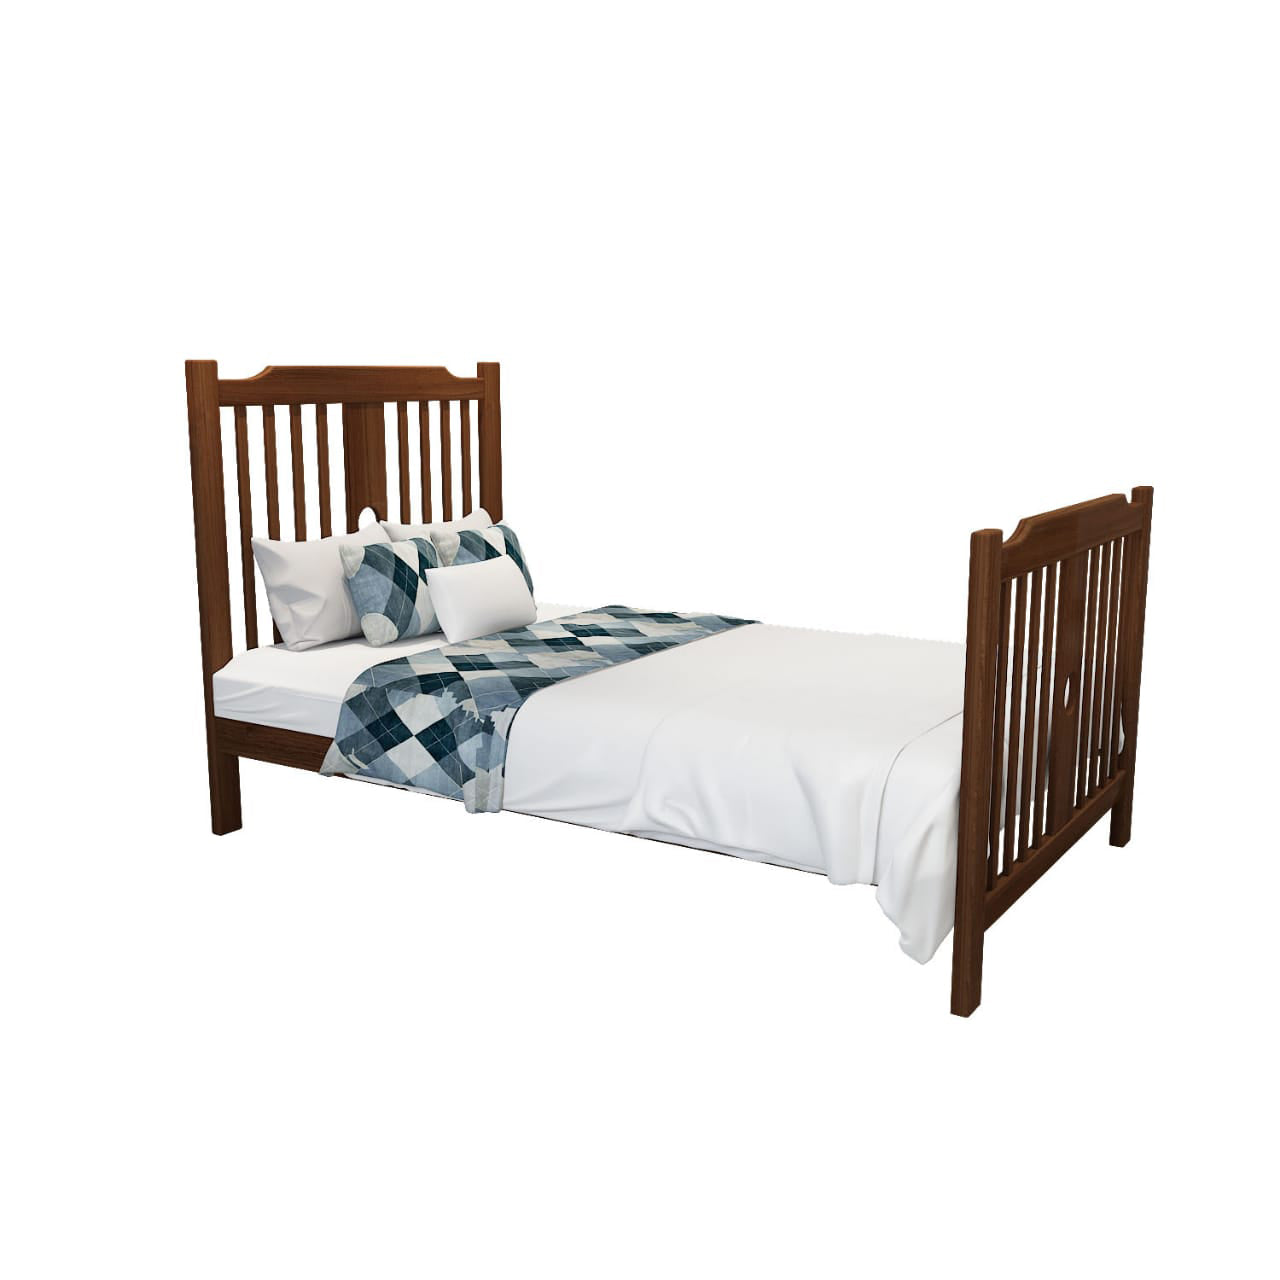 Natural beech wood bed 120×195 cm -MNR36